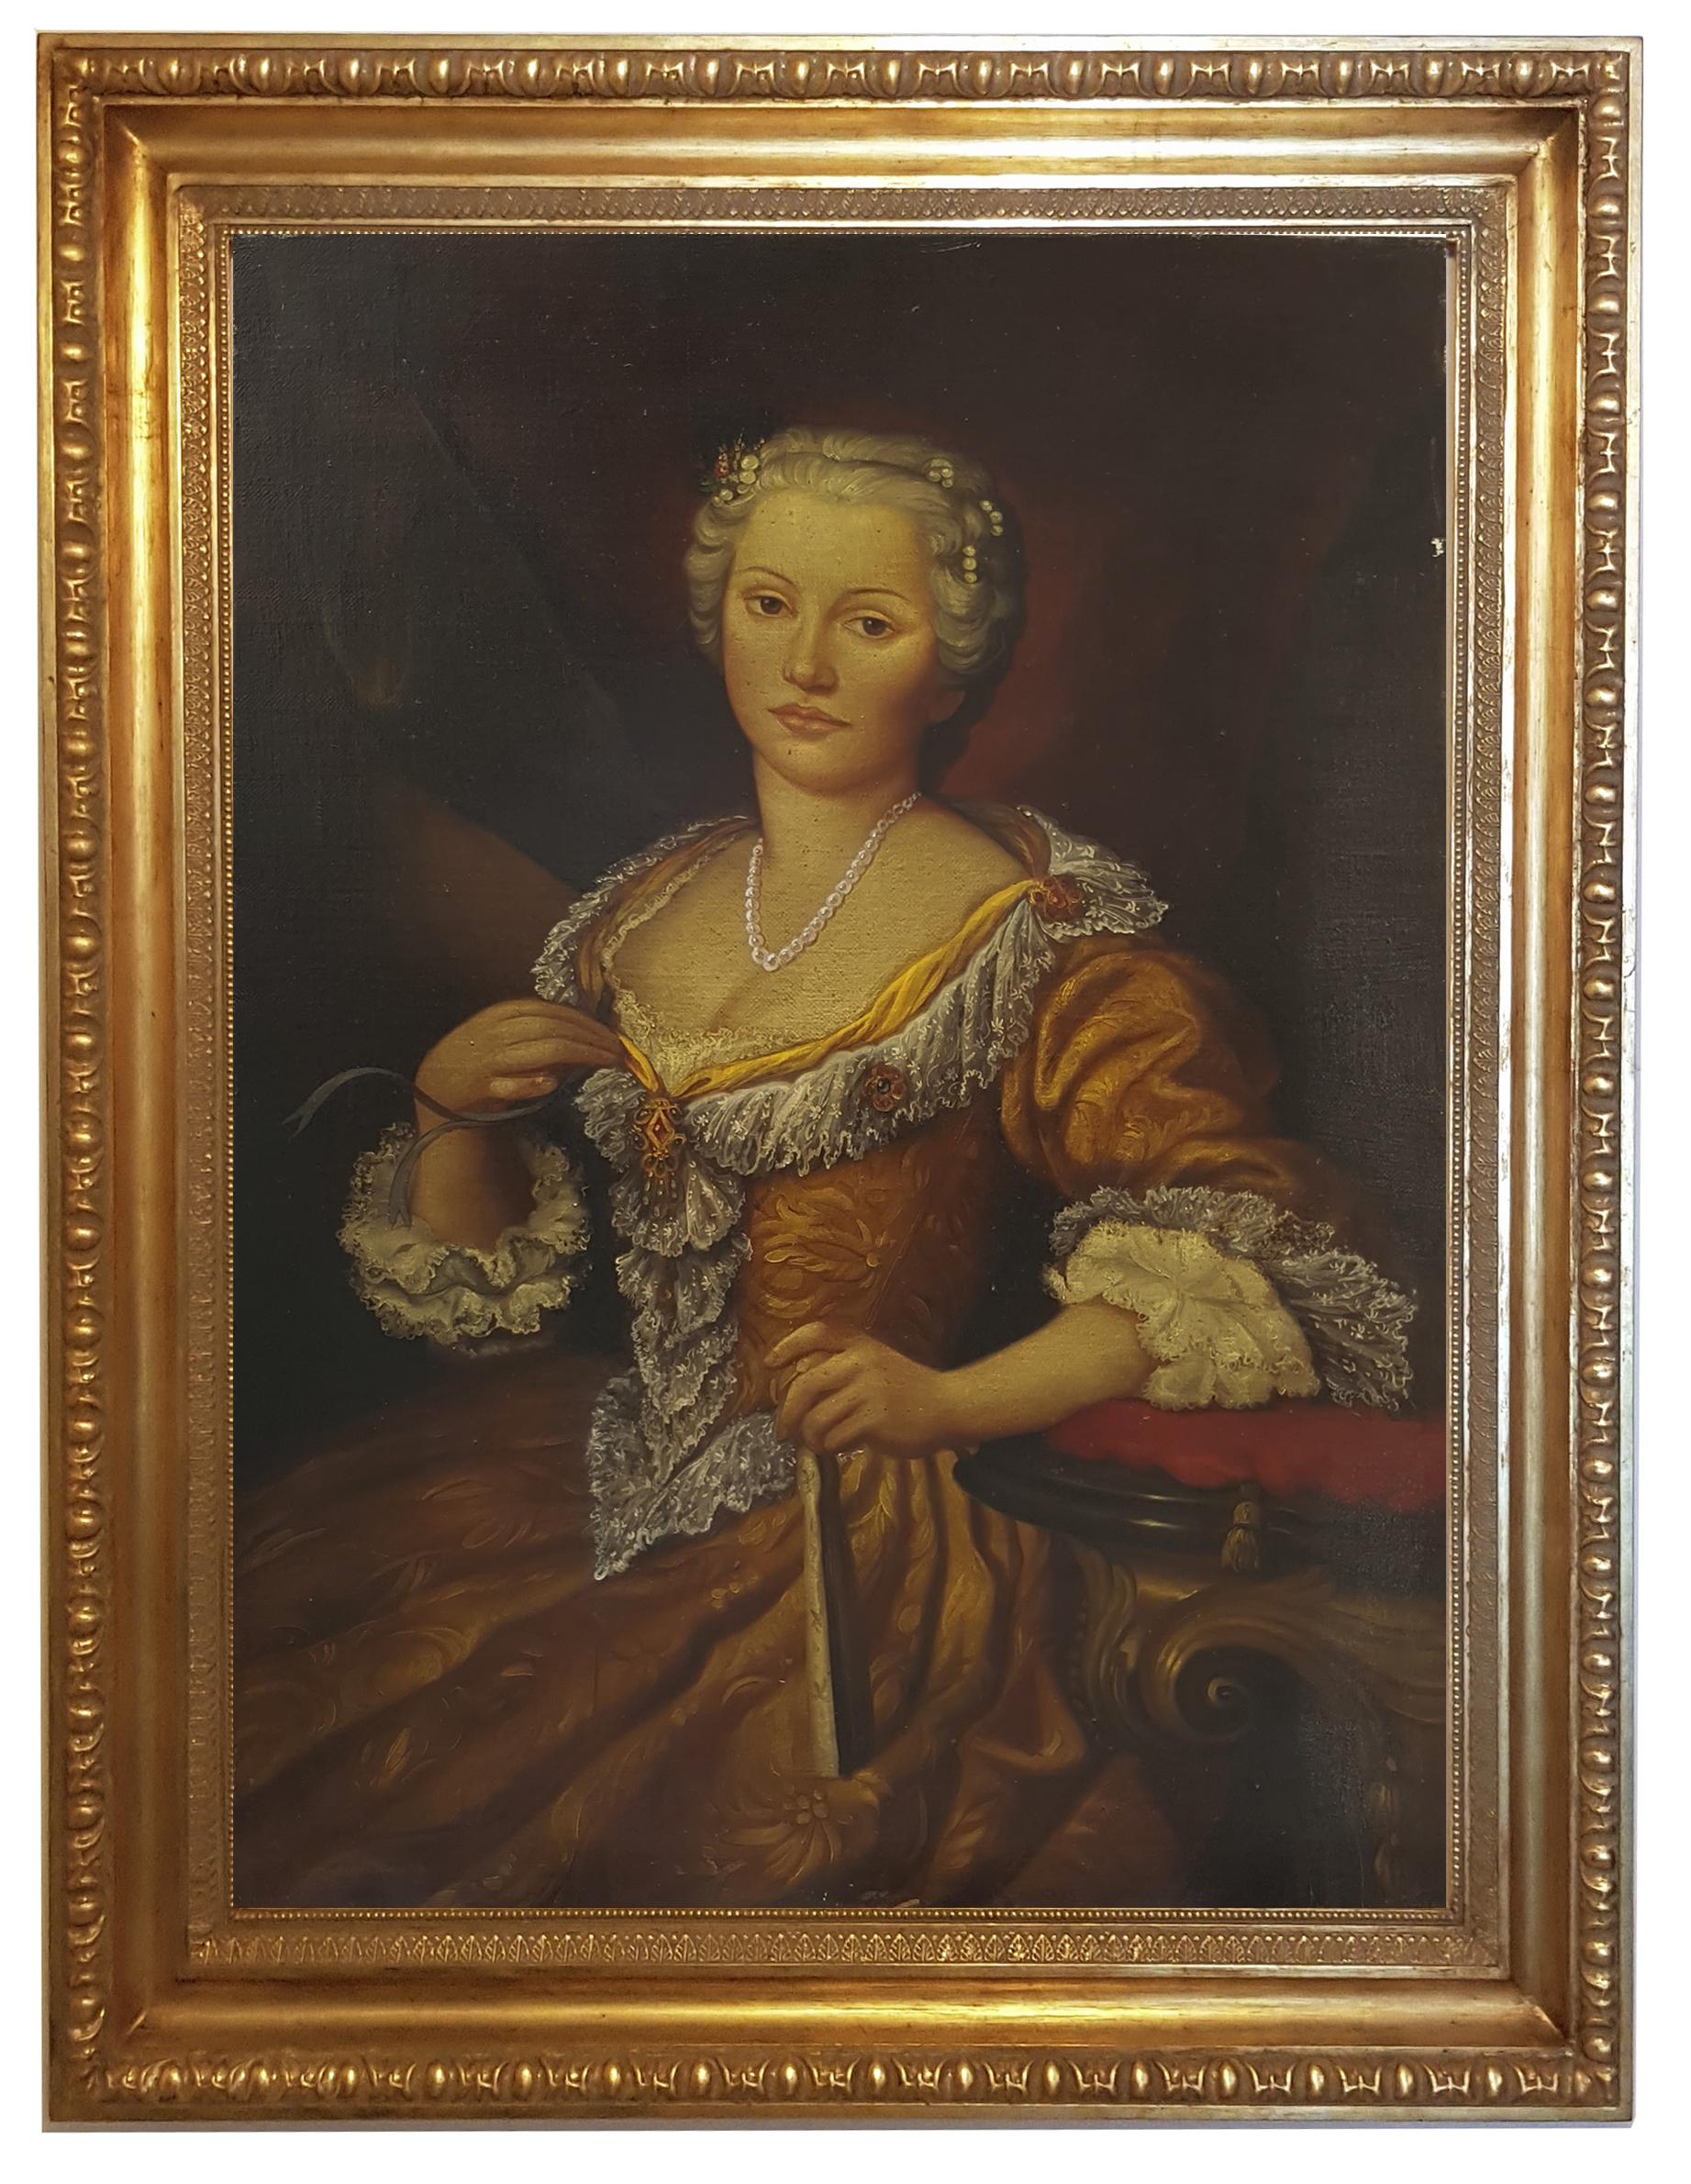 Ettore Frattini Portrait Painting - PORTRAIT OF A LADY E.Frattini - English School - Italy Figurative Oil on Canvas 